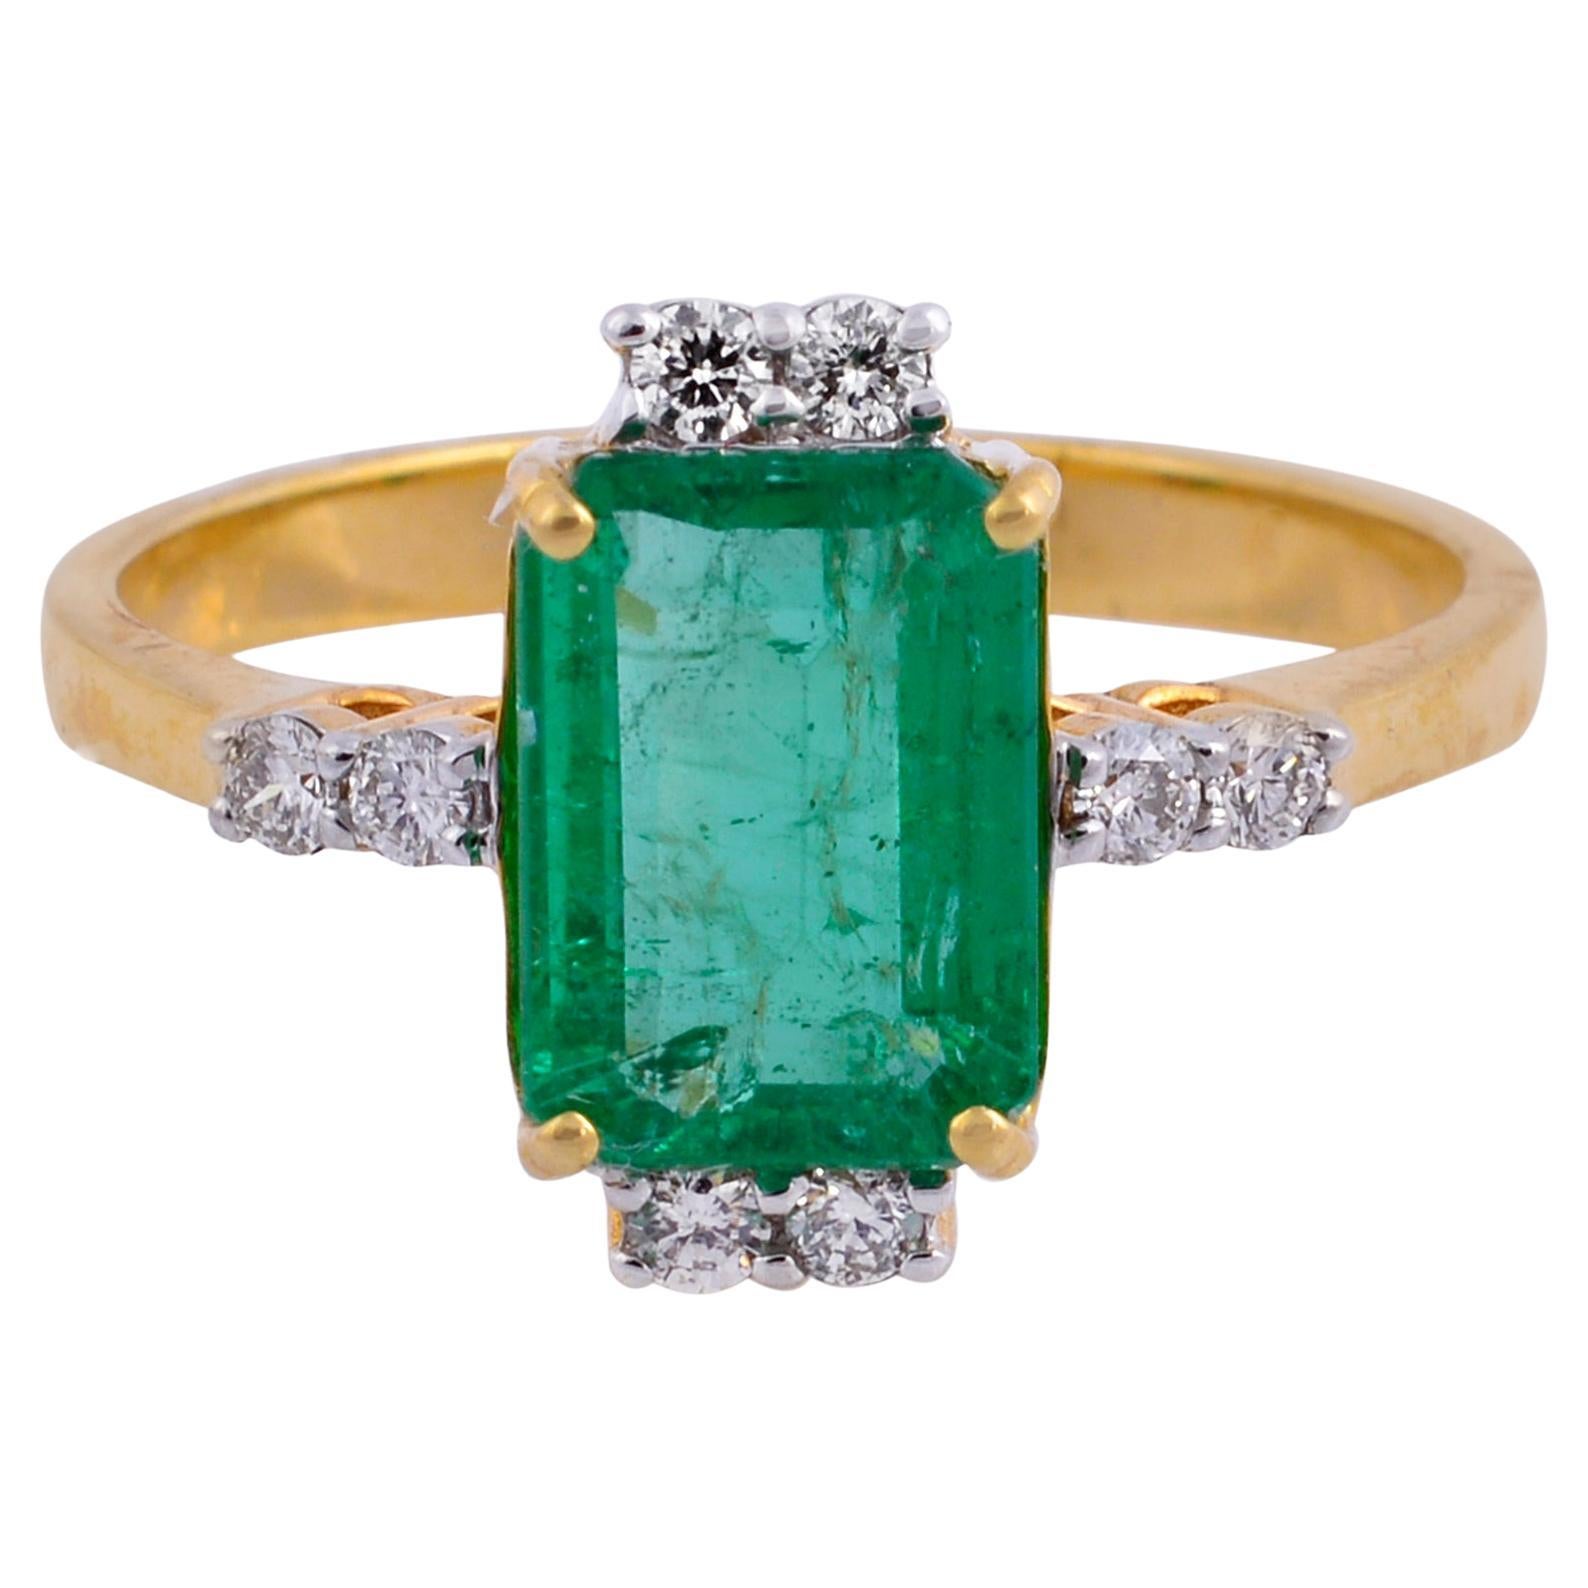 For Sale:  Natural Emerald Gemstone Wedding Ring Diamond 18k Yellow Gold Handmade Jewelry